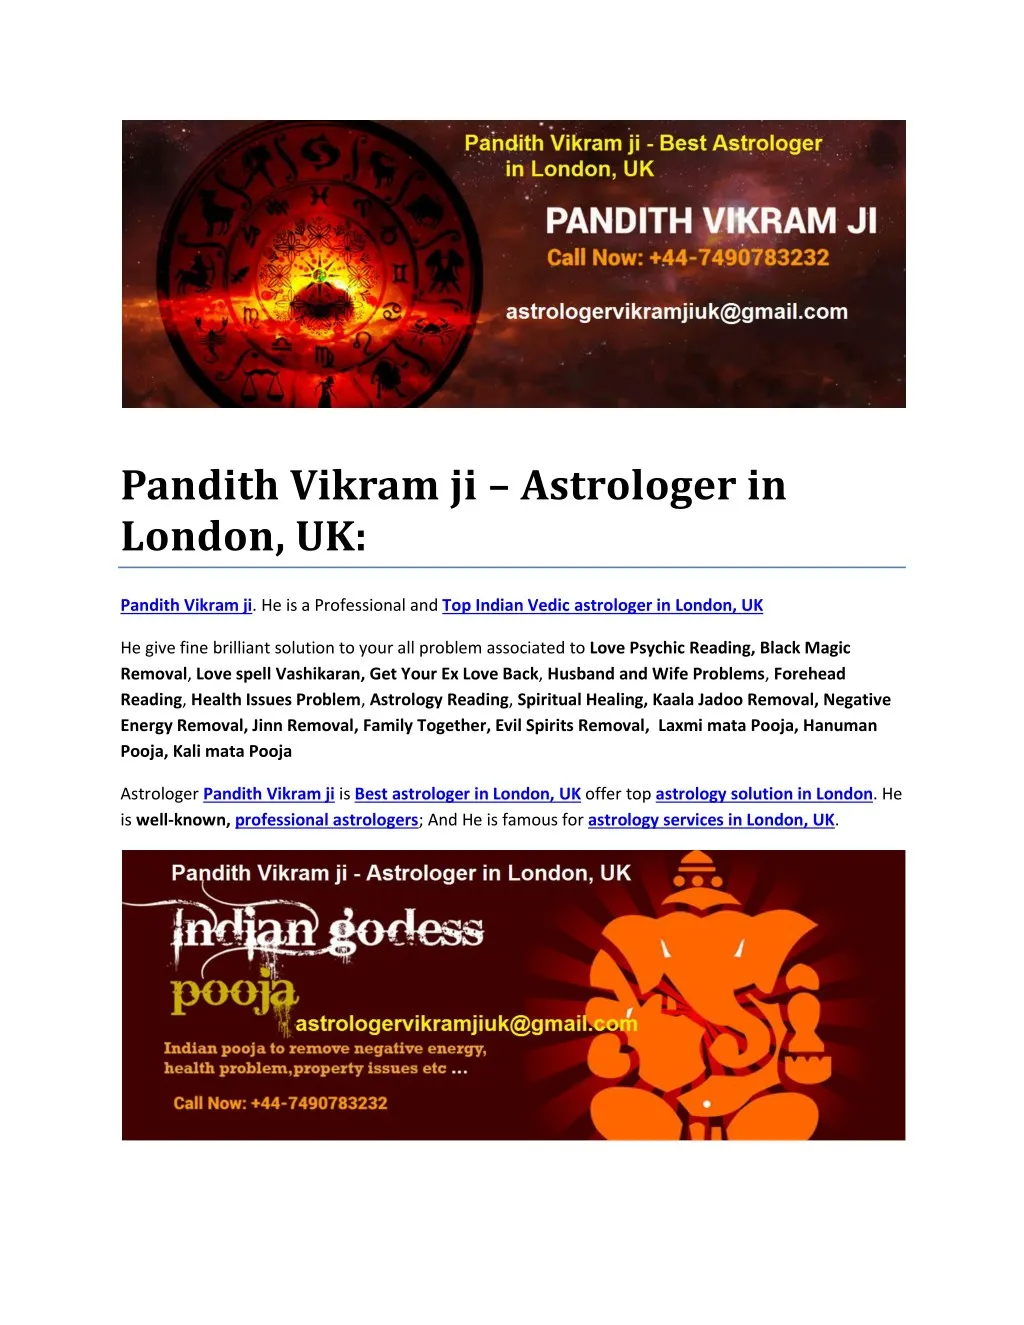 pandith vikram ji astrologer in london uk